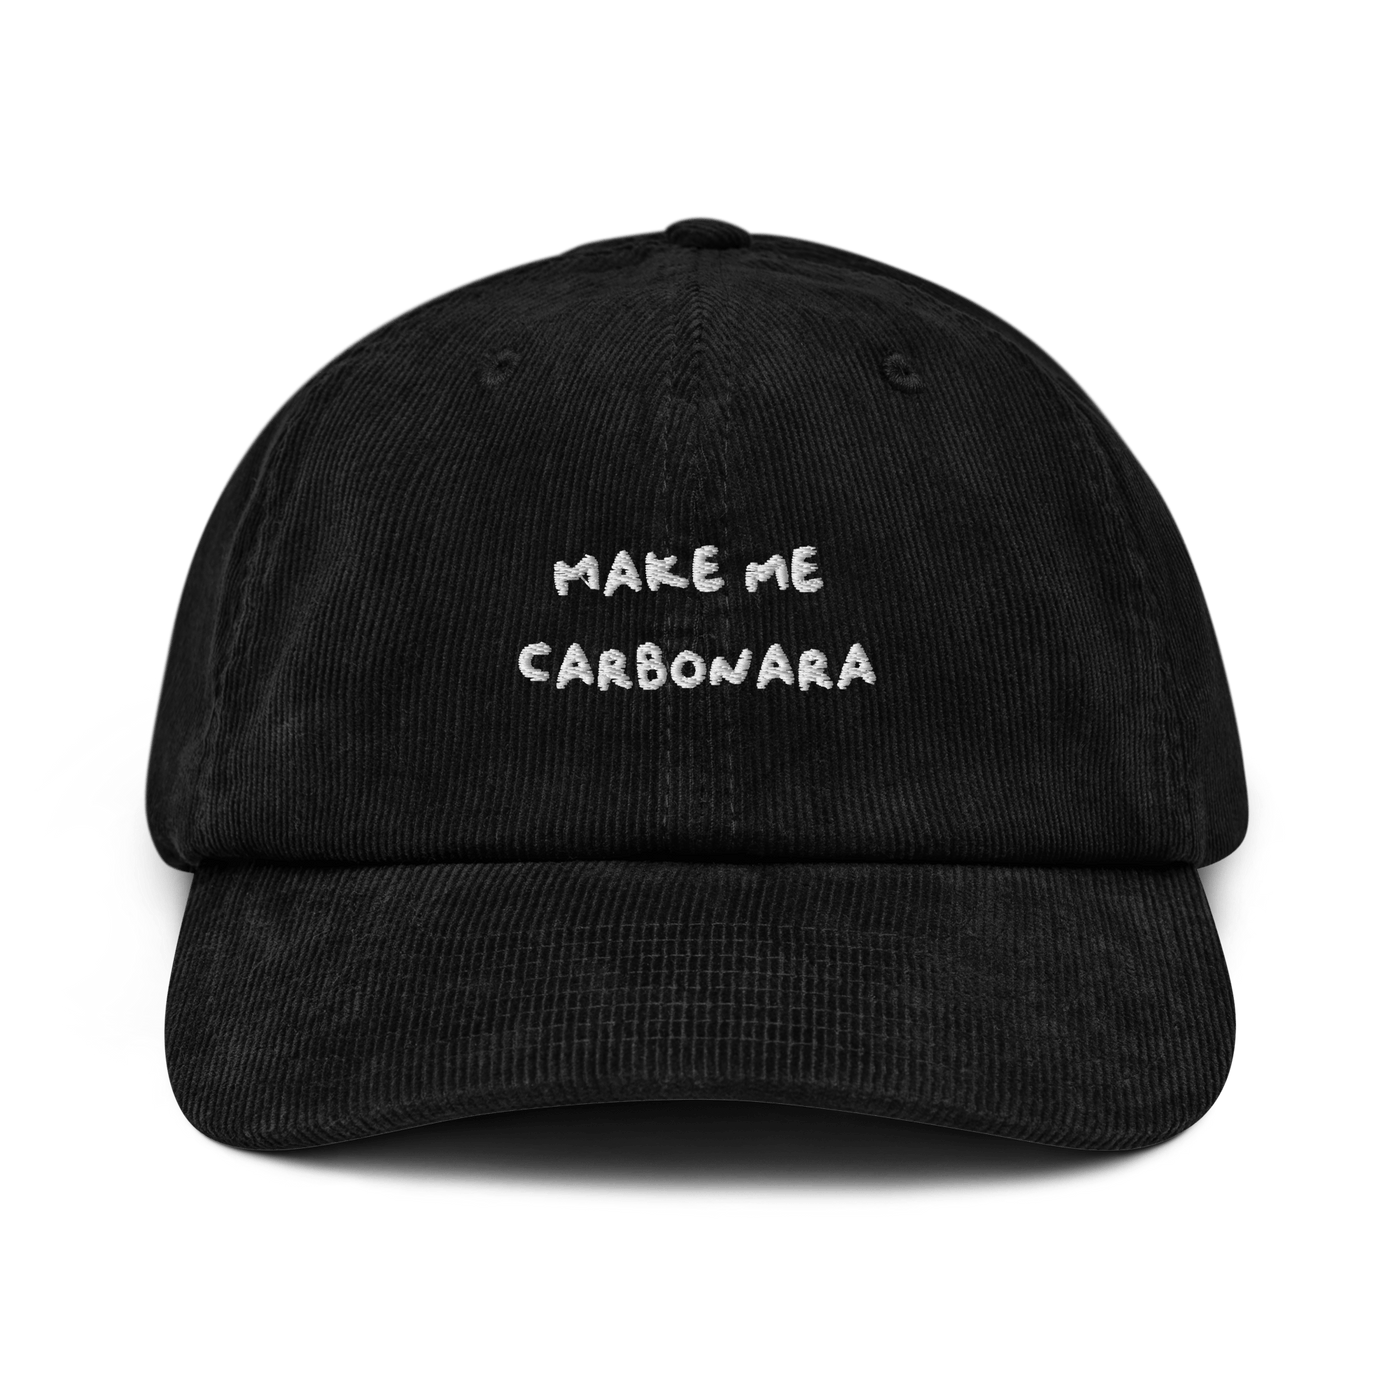 Make me Carbonara Corduroy hat - Black - - Just Another Cap Store